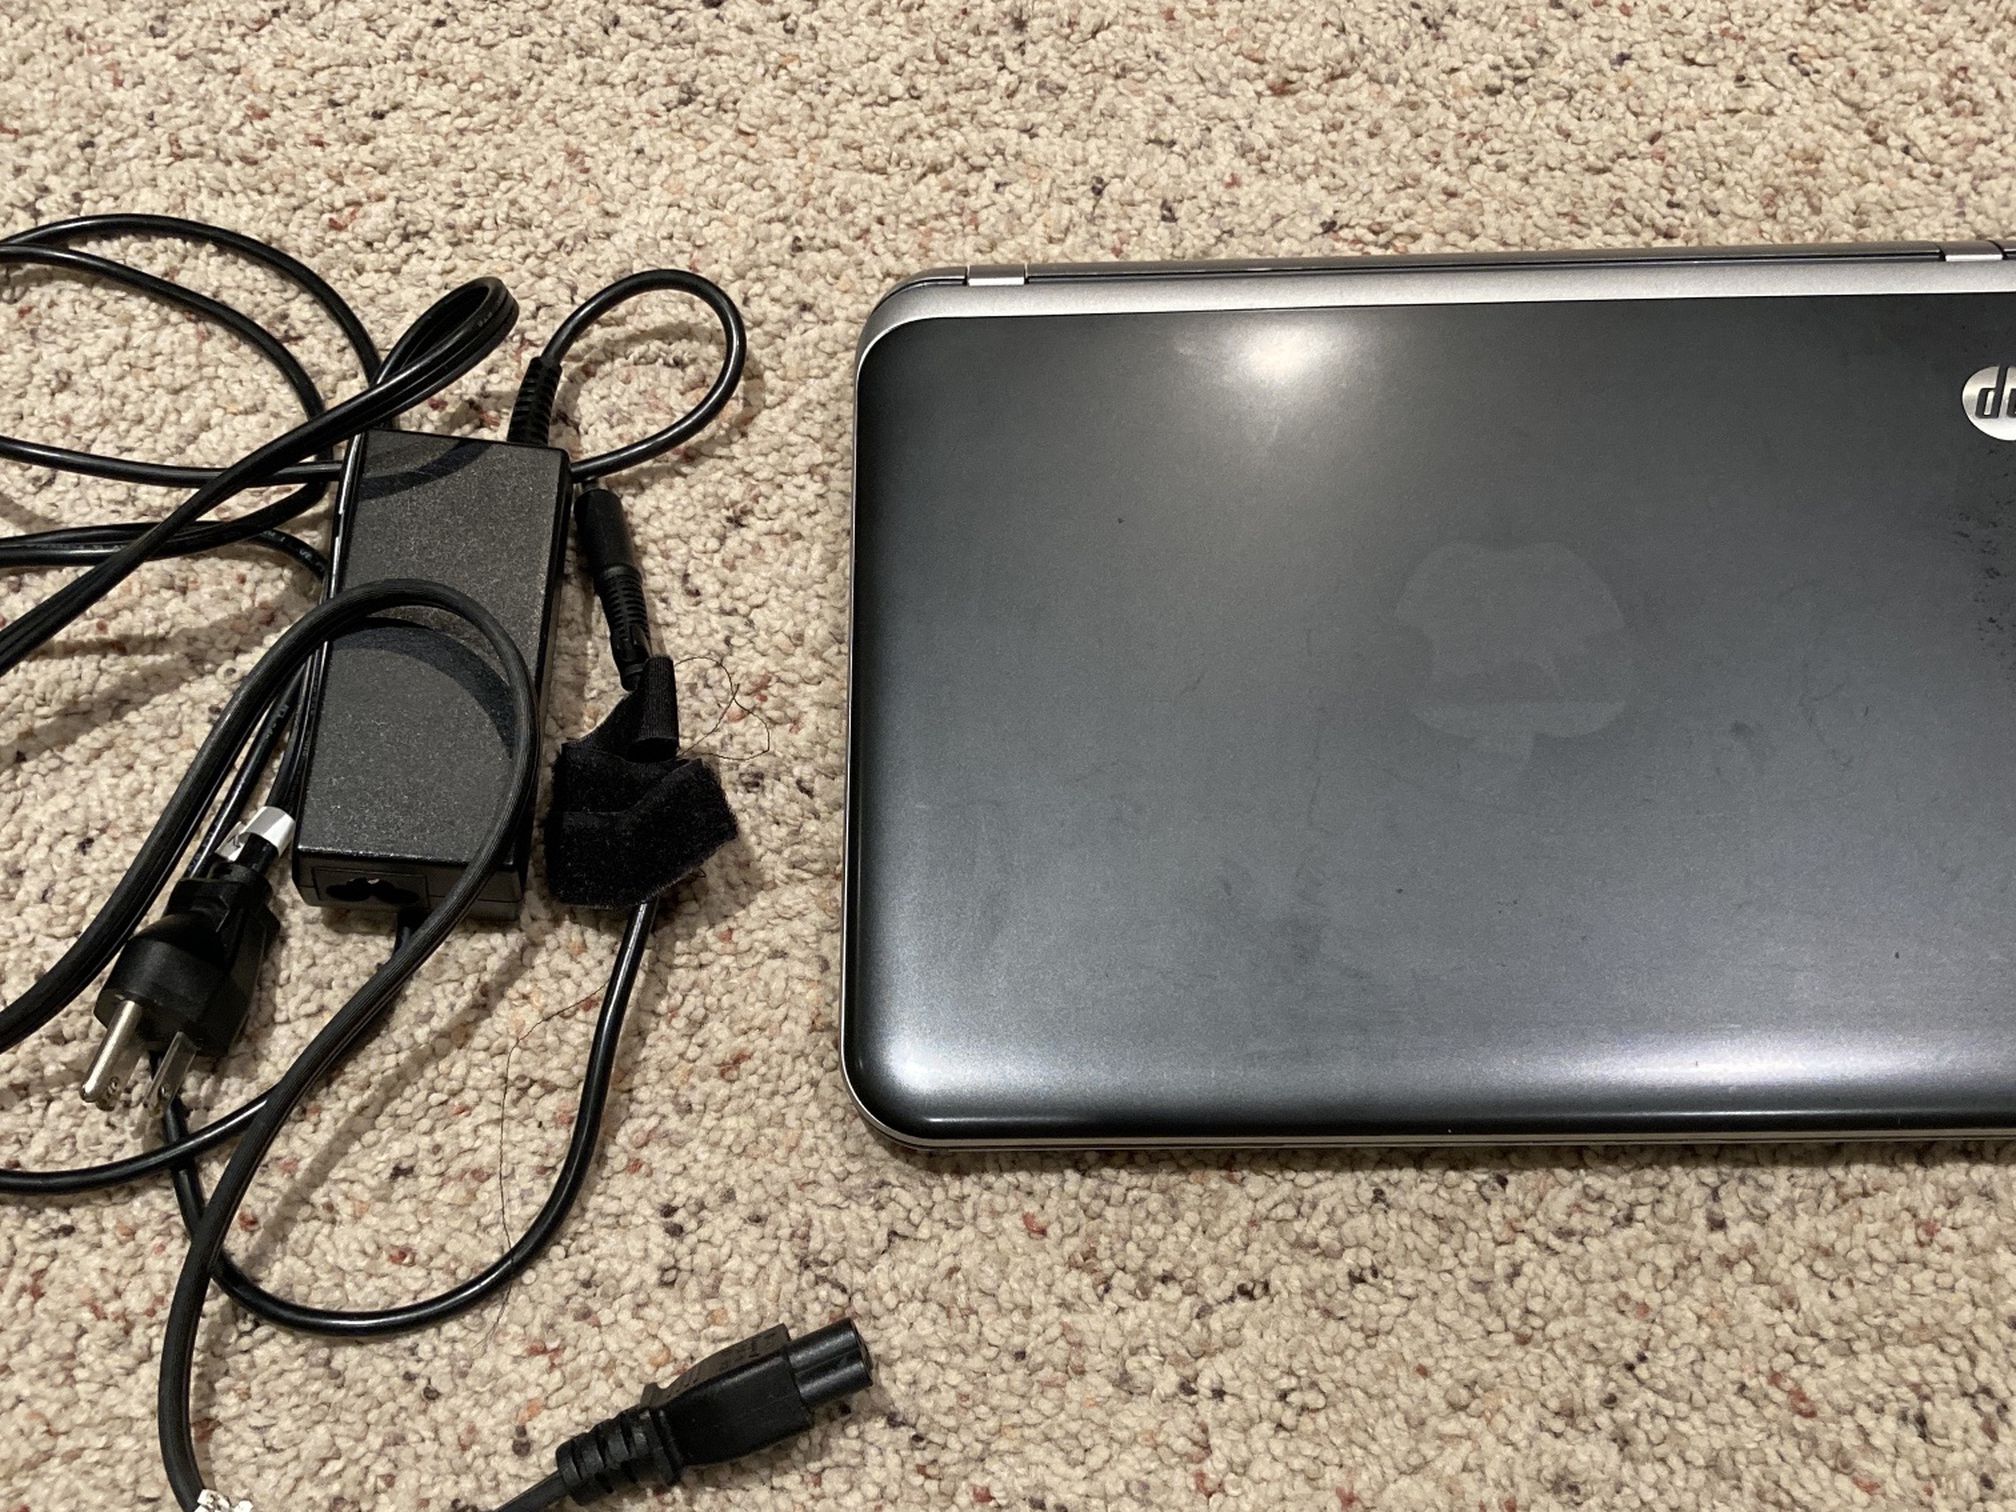 HP Pavilion dm1-4010us Laptop Notebook With Beats Audio 11.6” Screen